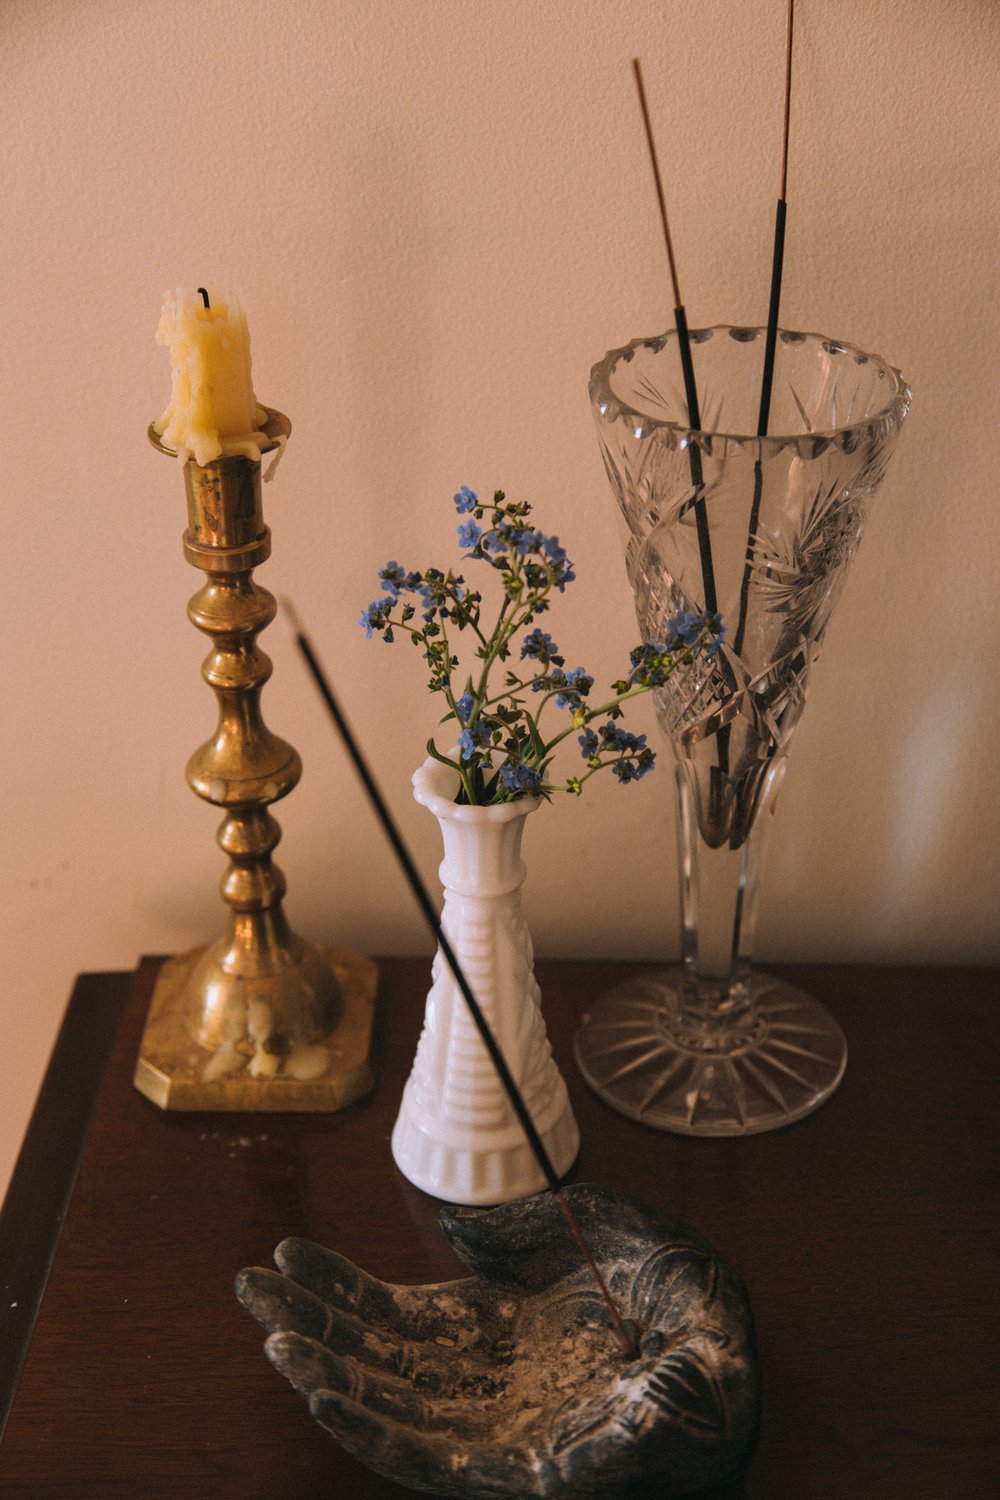 a sweet bud vase for remembering spring